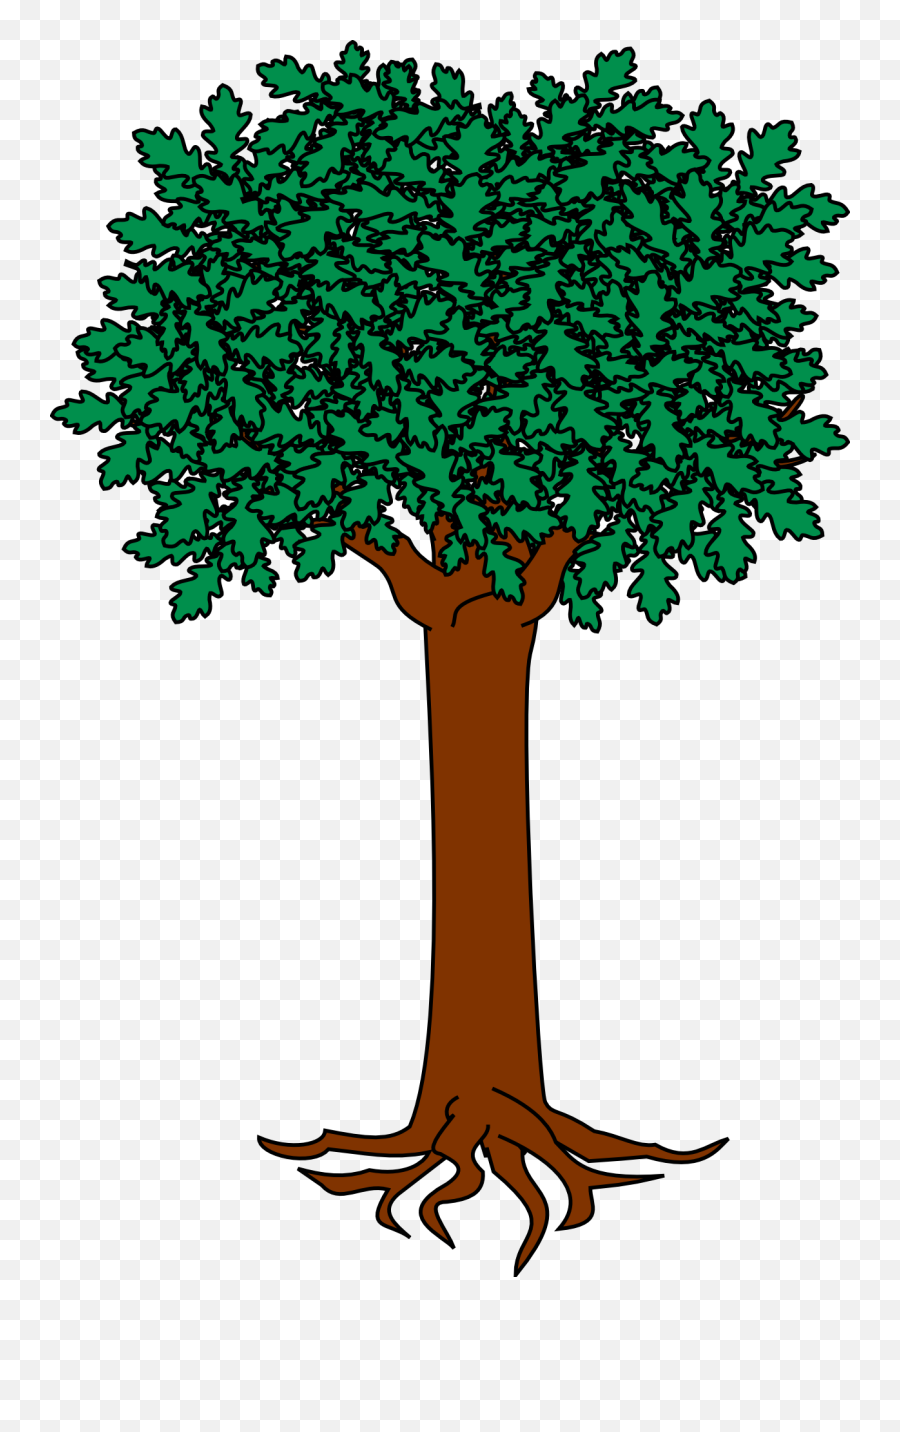 Download Free Photo Of Treeheraldicsymboldesignicon - Tree Symbol For Coat Of Arms Png,Free Tree Icon